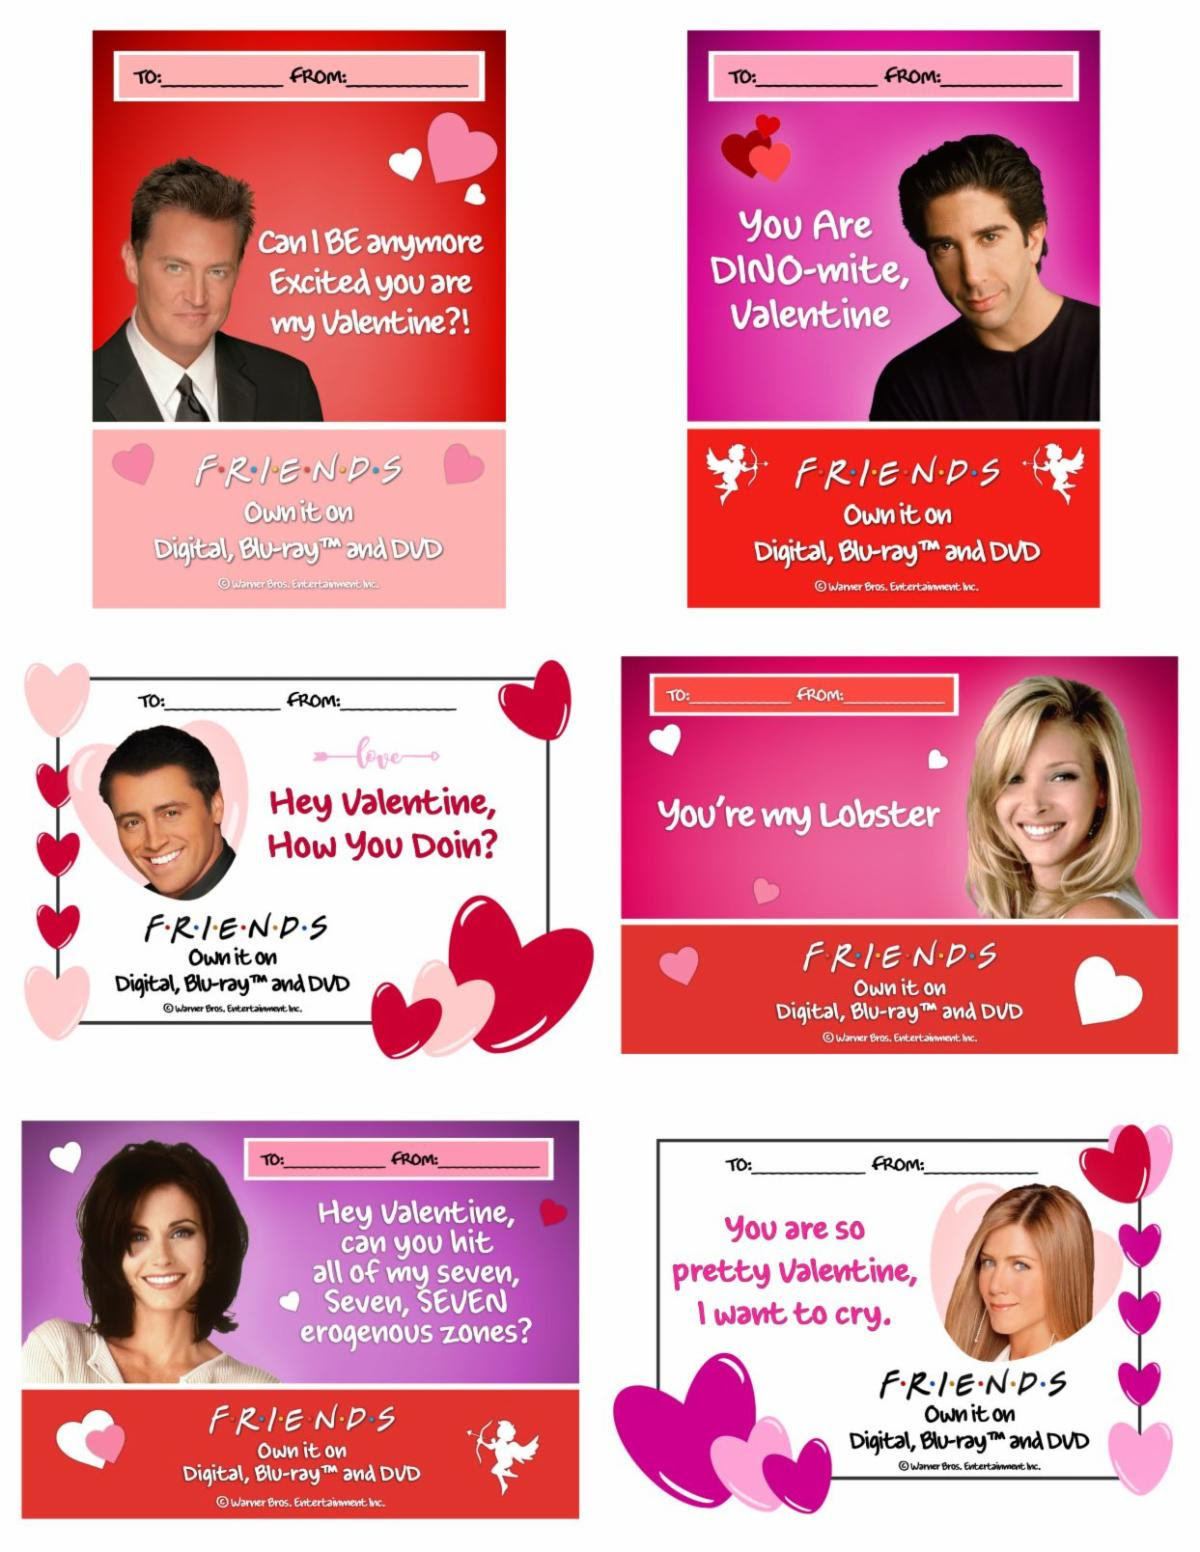 Friends Valentine's Day cards